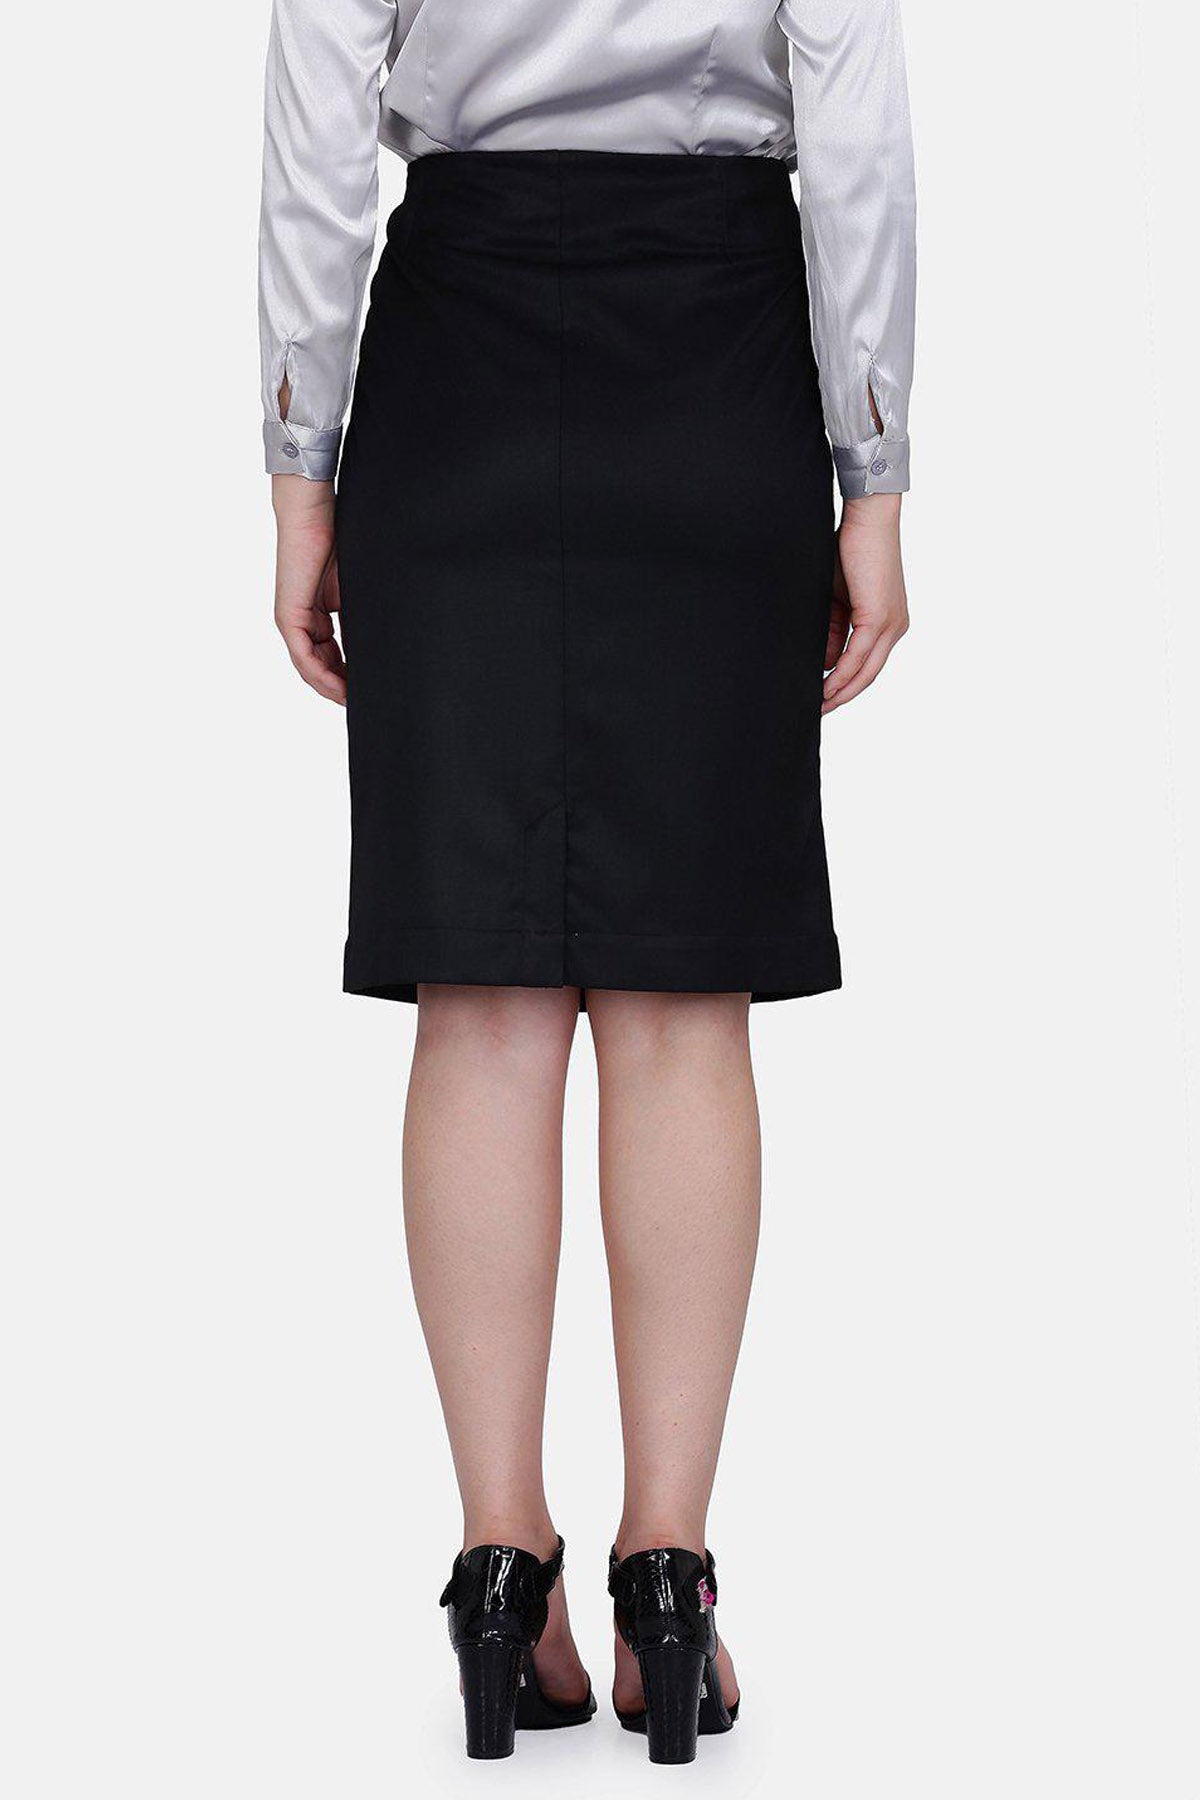 Black Poly Cotton Straight Skirt